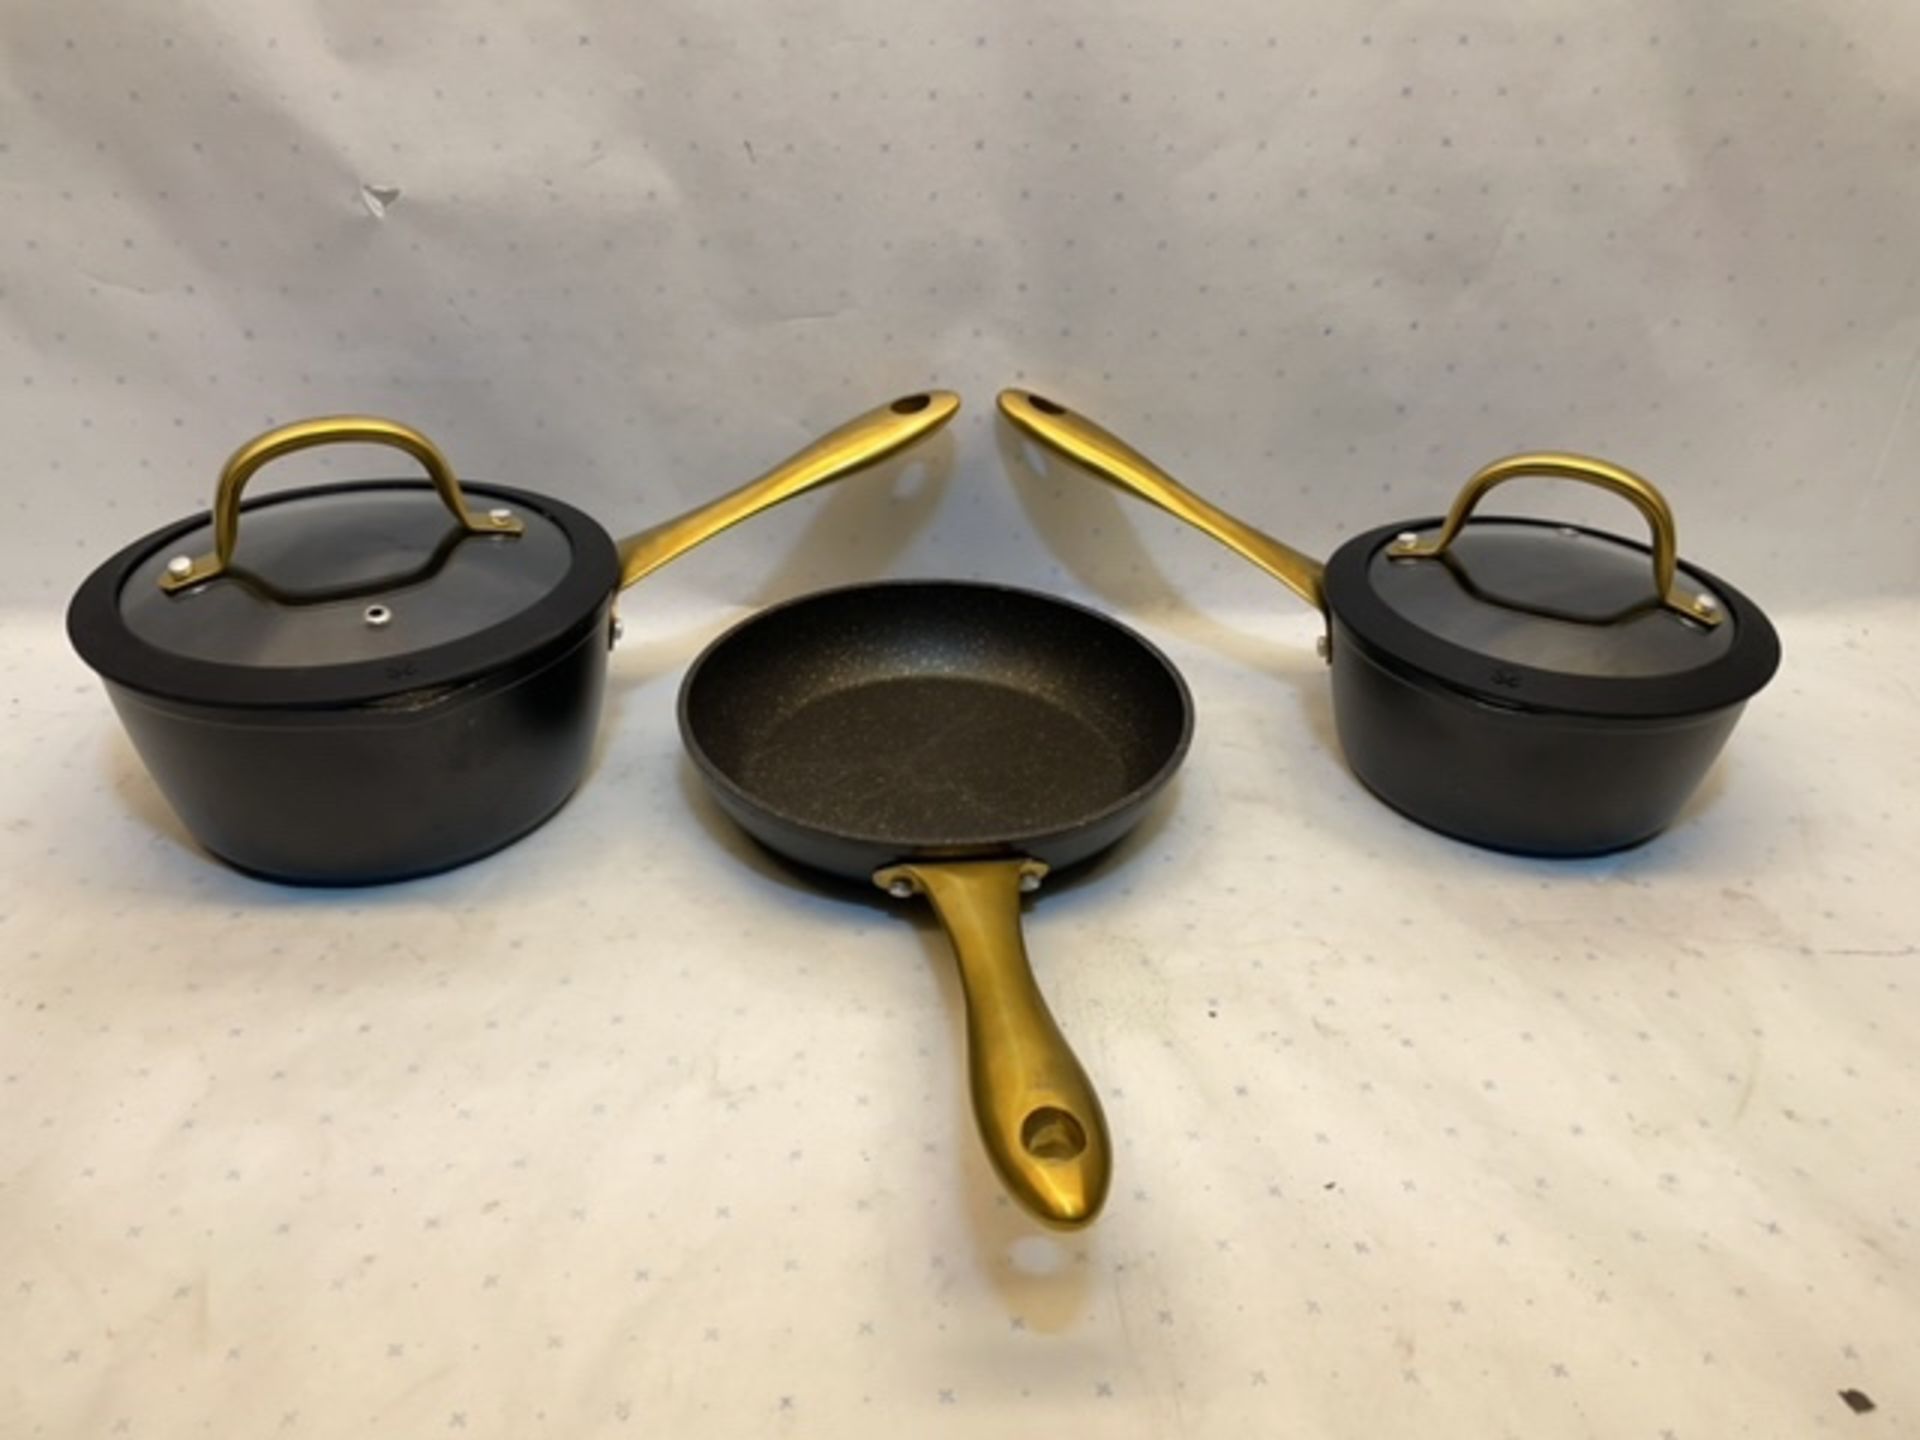 3 x Black Pan Set | Gold Coloured Handles